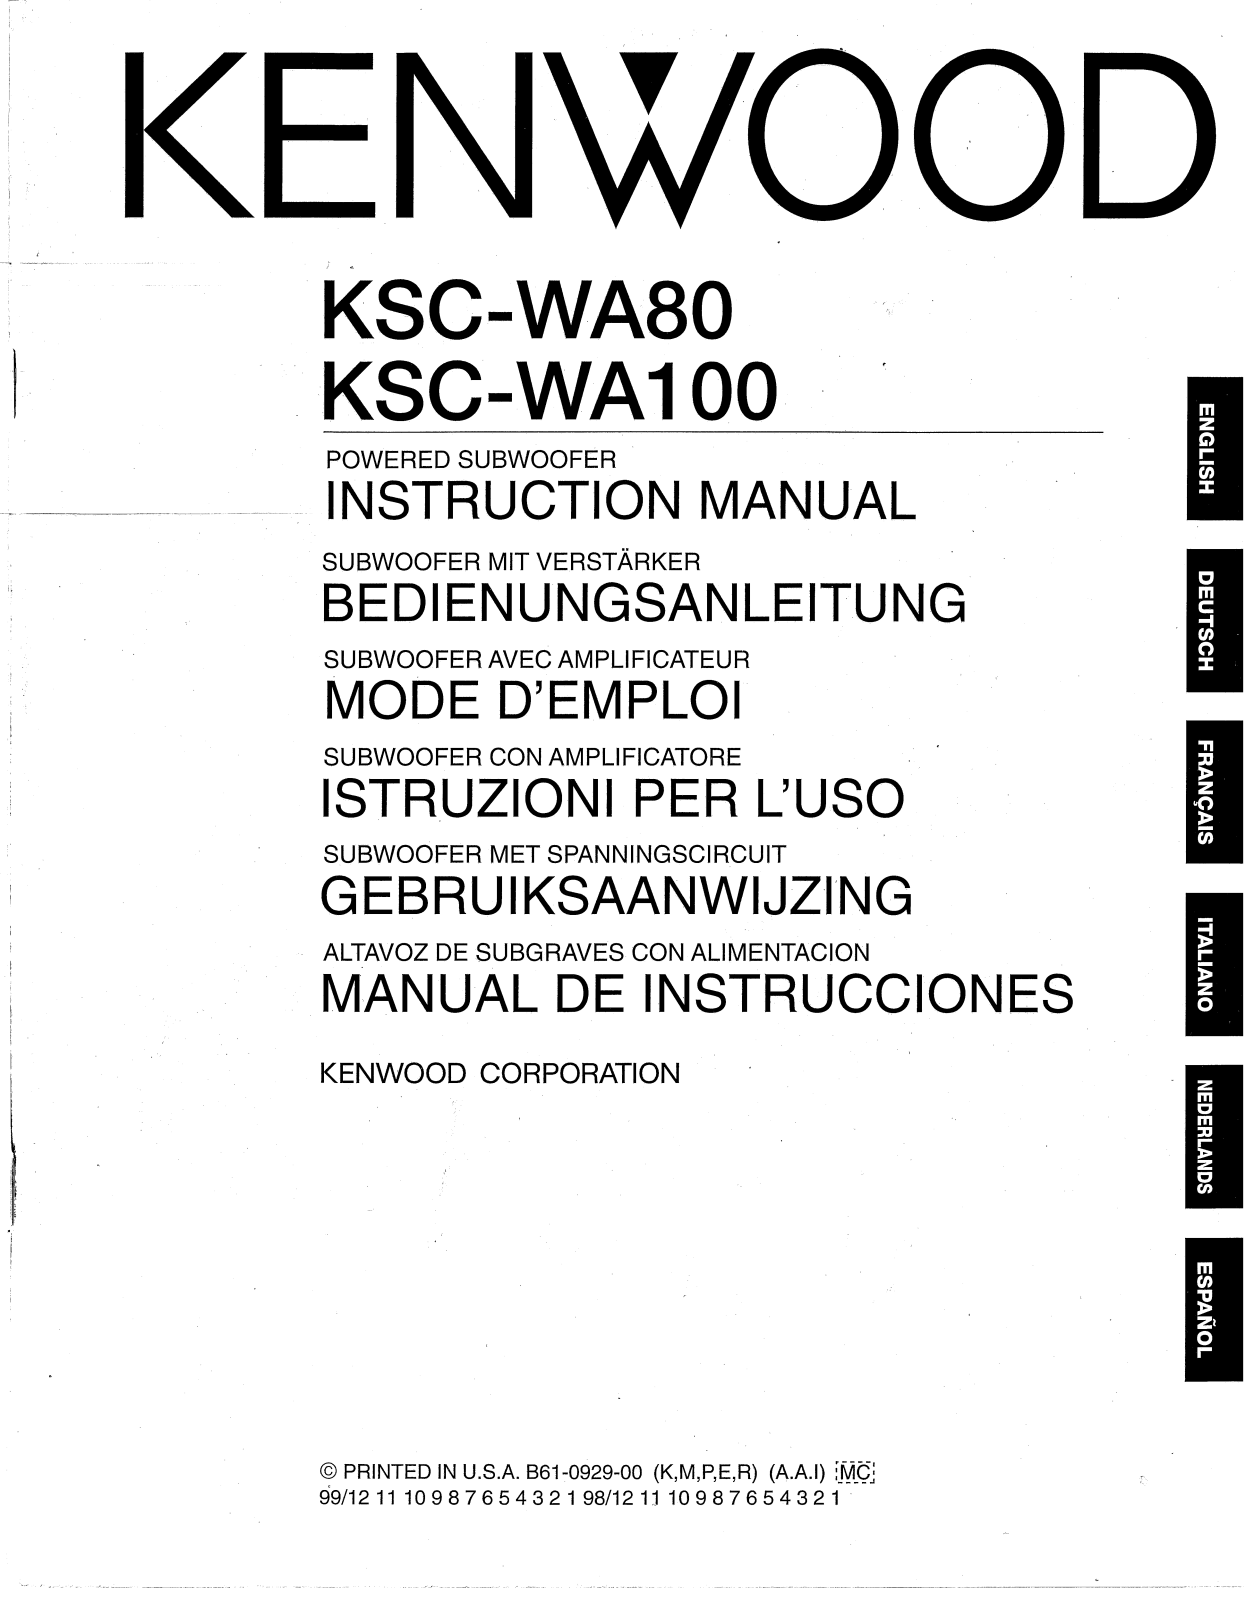 Kenwood KSC-WA100, KSC-WA80 Owner's Manual